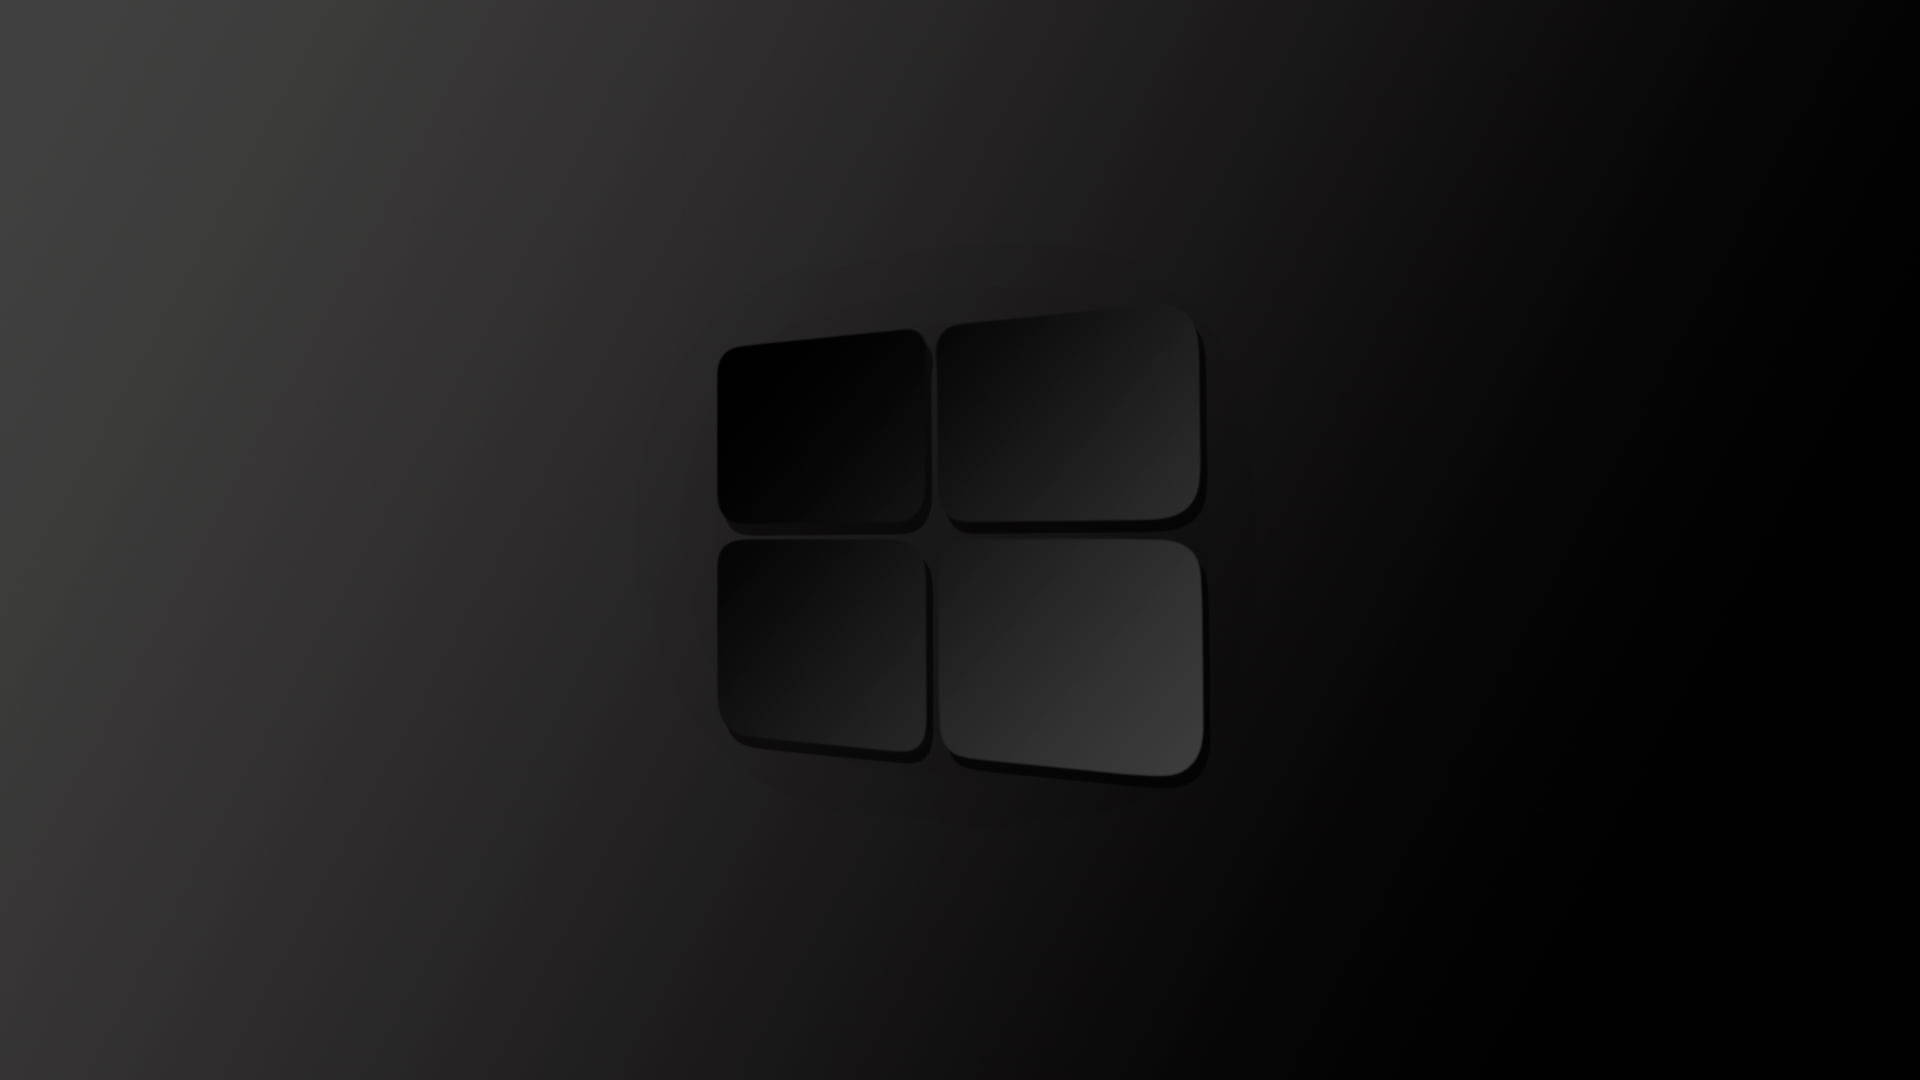 Black Windows 10 Hd With Shadow Wallpaper